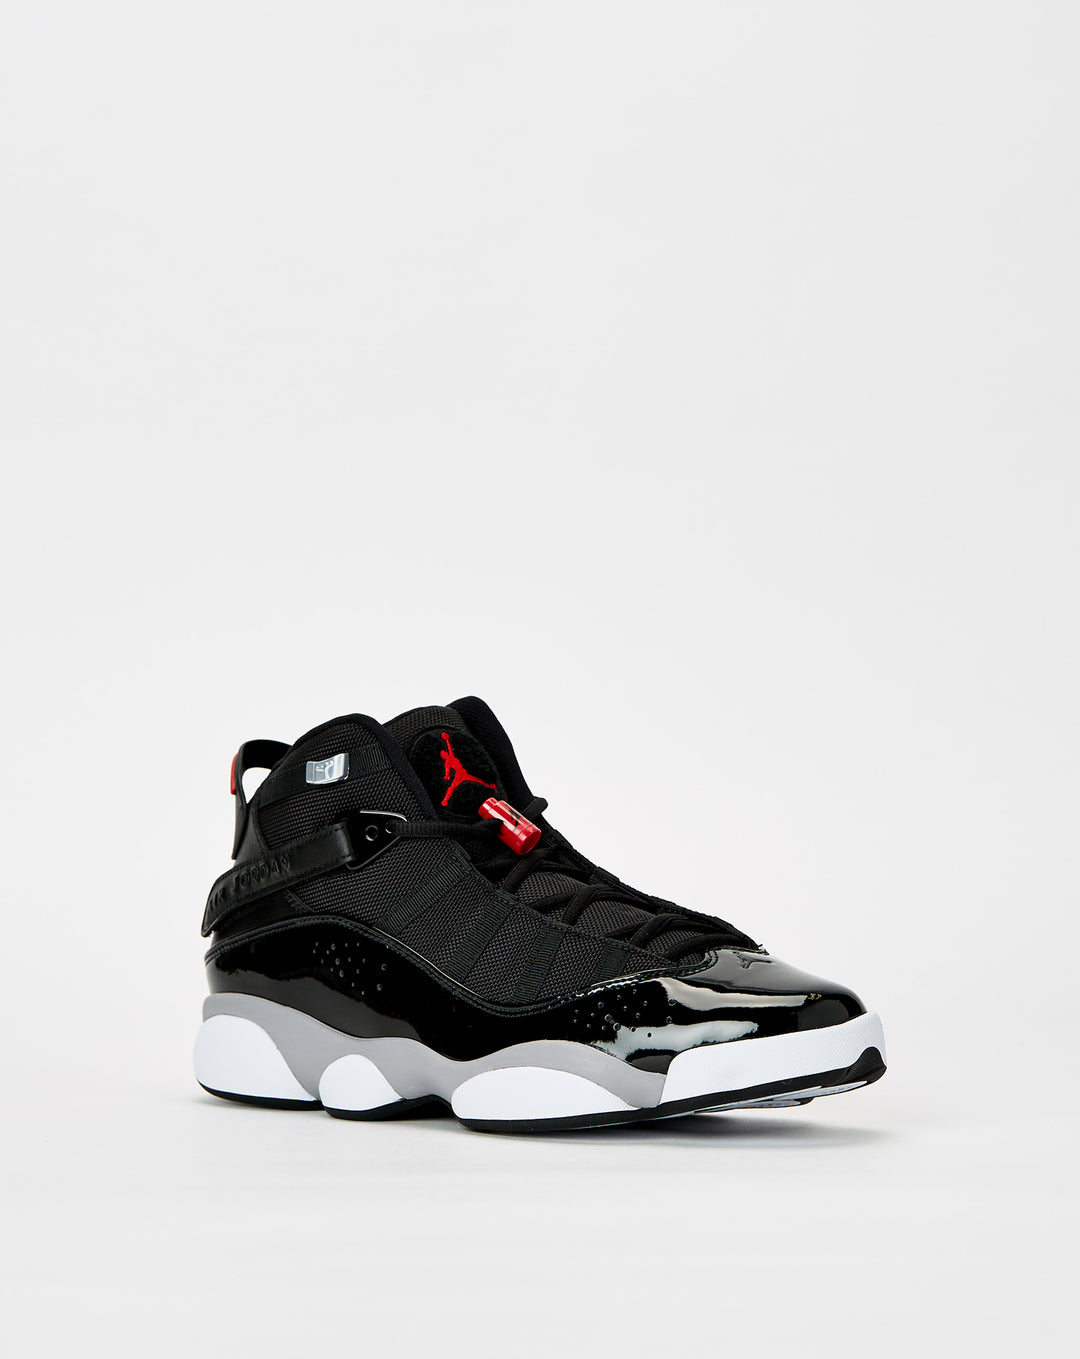 Air Jordan nike jordan adidas reebok ted yeezy sneakers release  - Cheap Erlebniswelt-fliegenfischen Jordan outlet